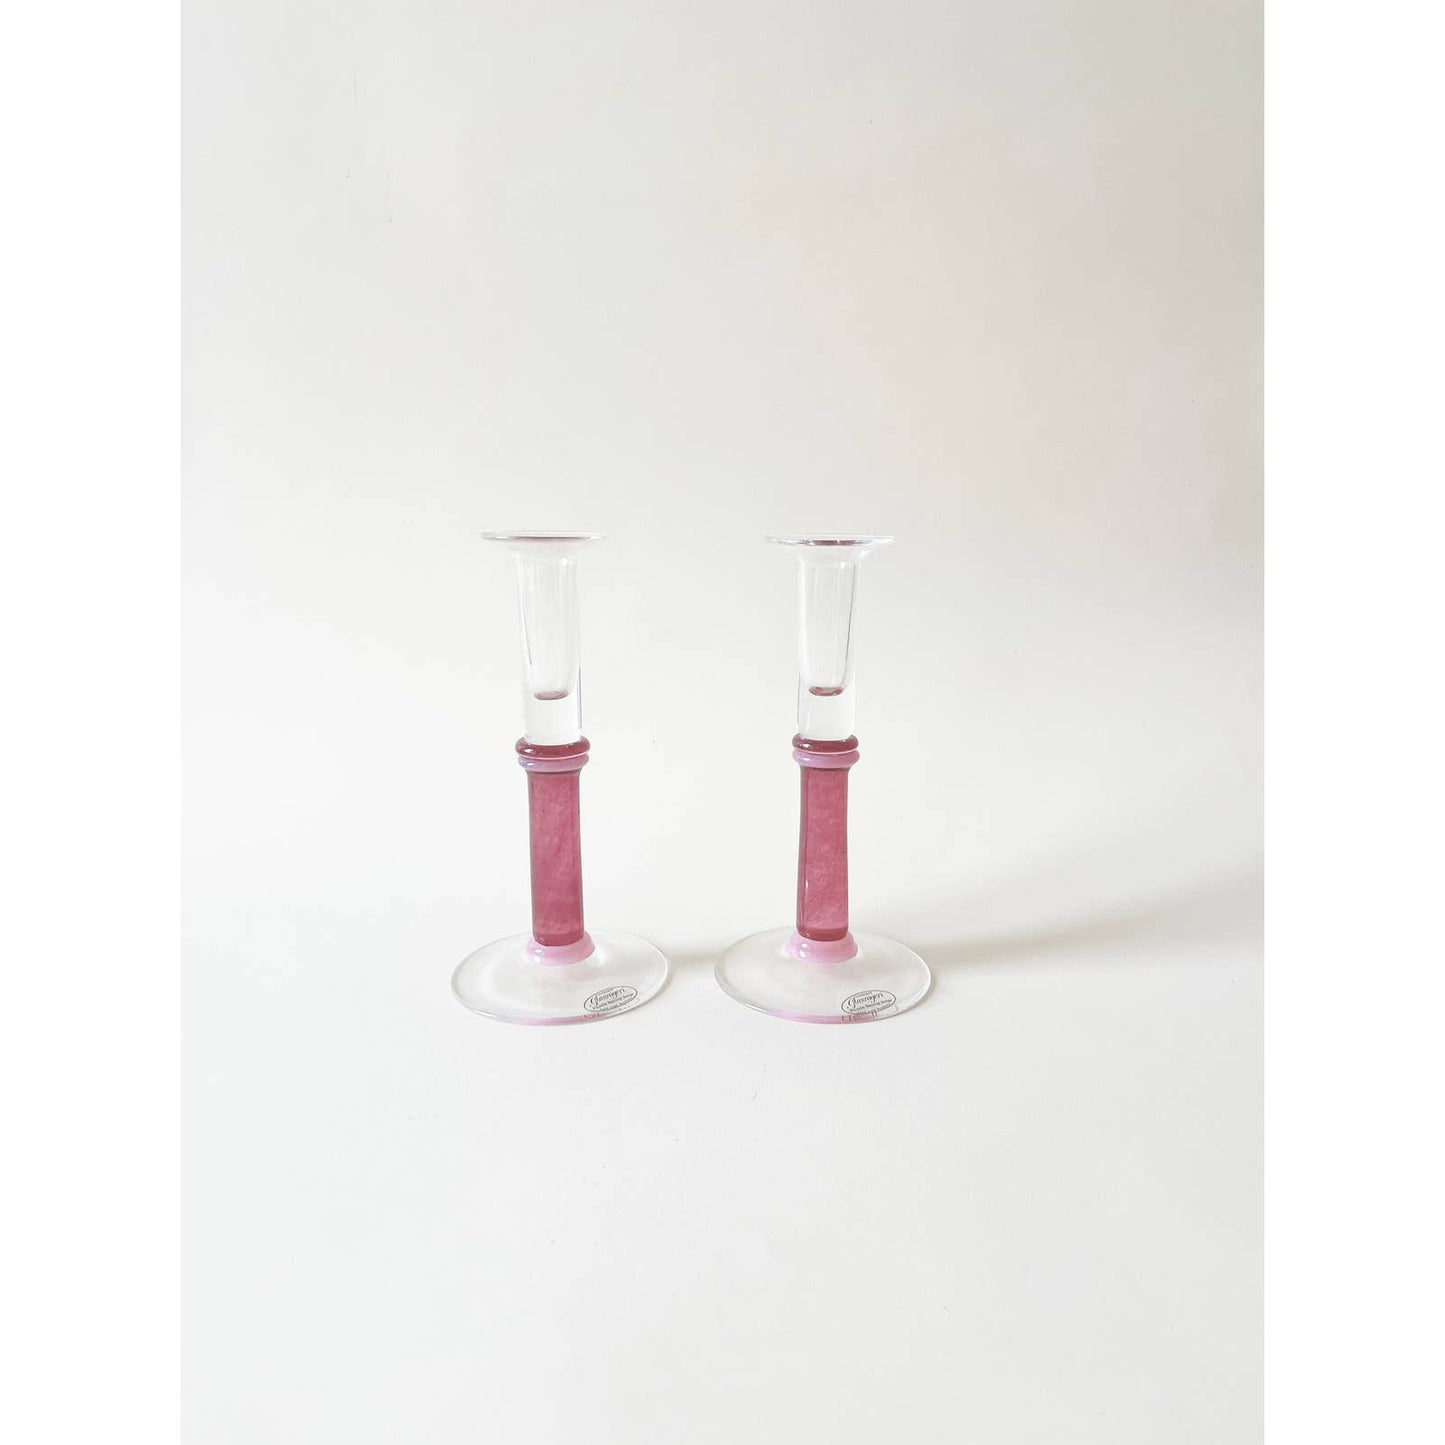 Pair of Vintage Mod Crystal Pink Candle Holders